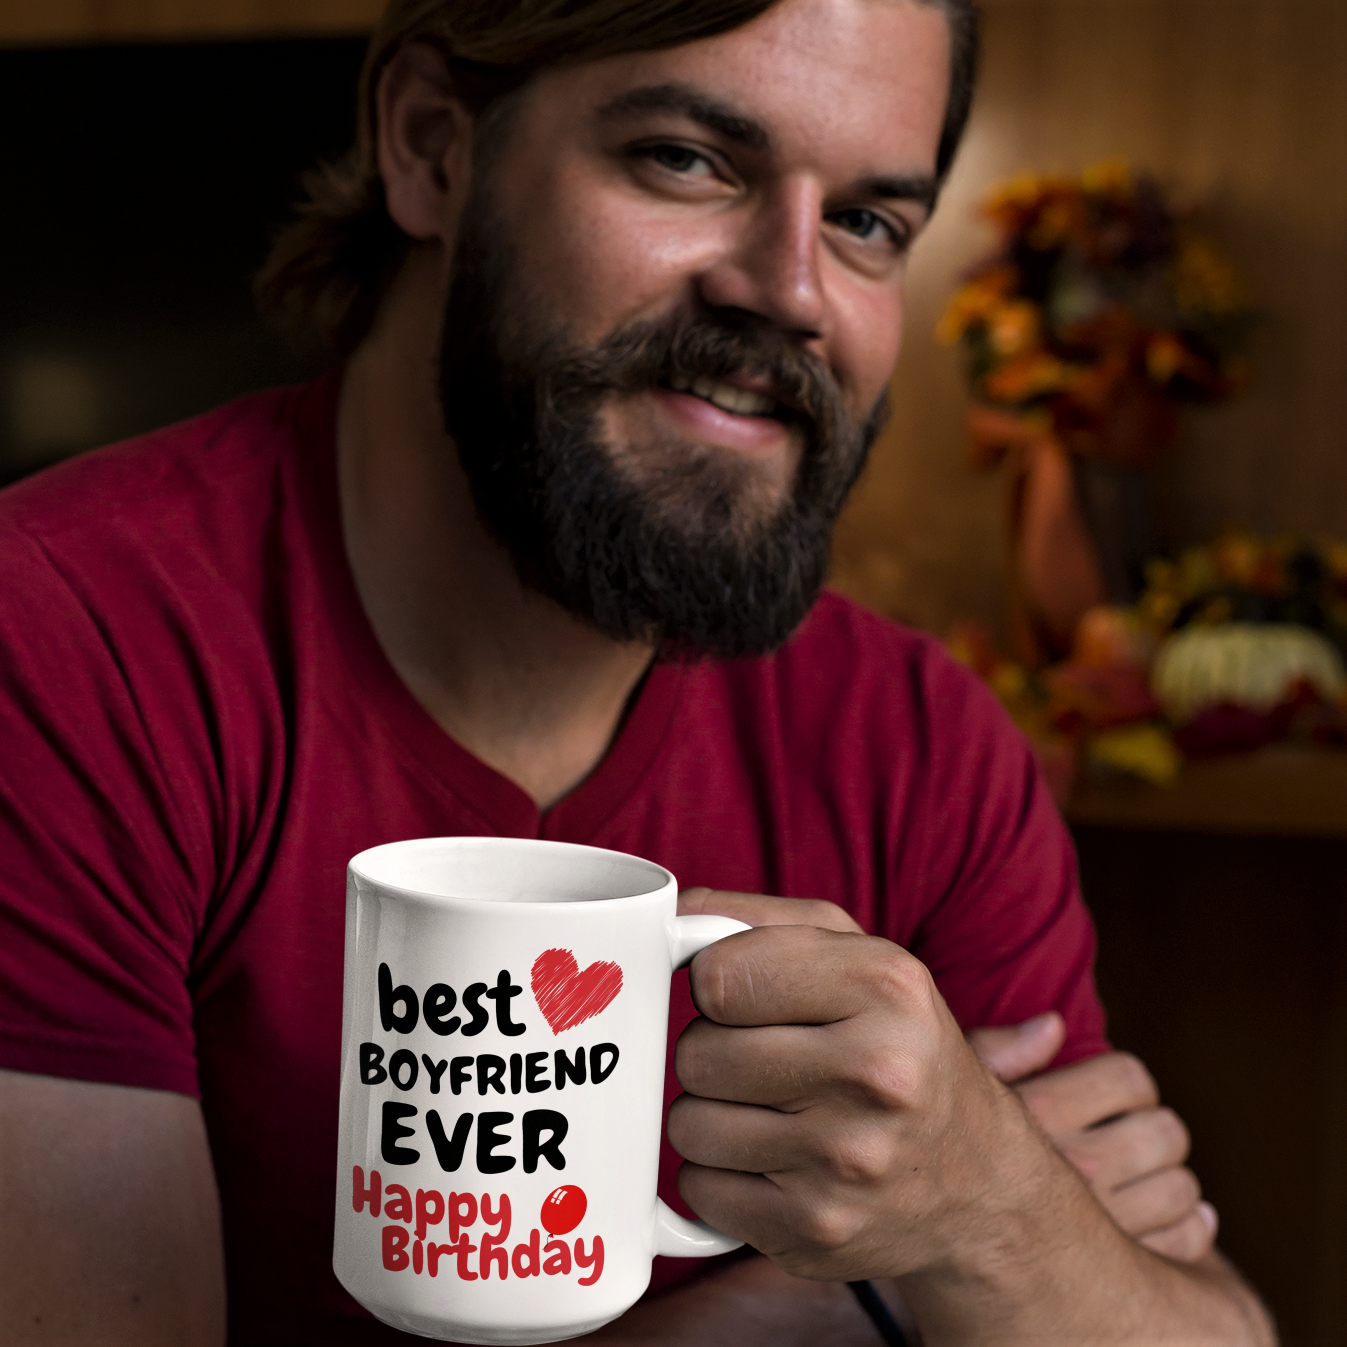 best boyfriend ever happy birthday gift coffee mug